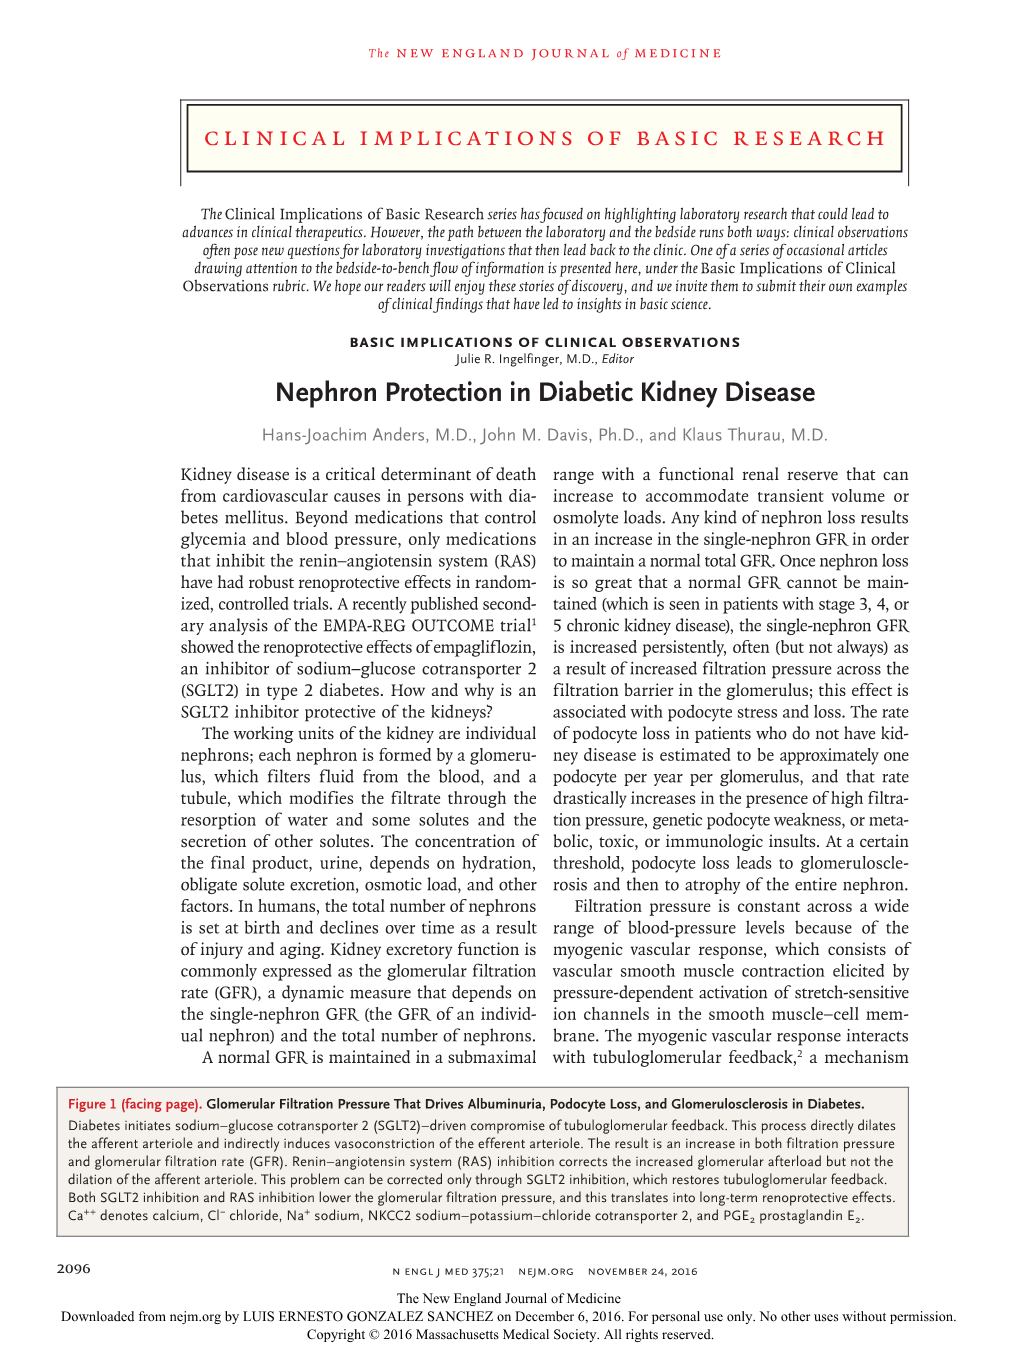 Nephron Protection in Diabetic Kidney Disease